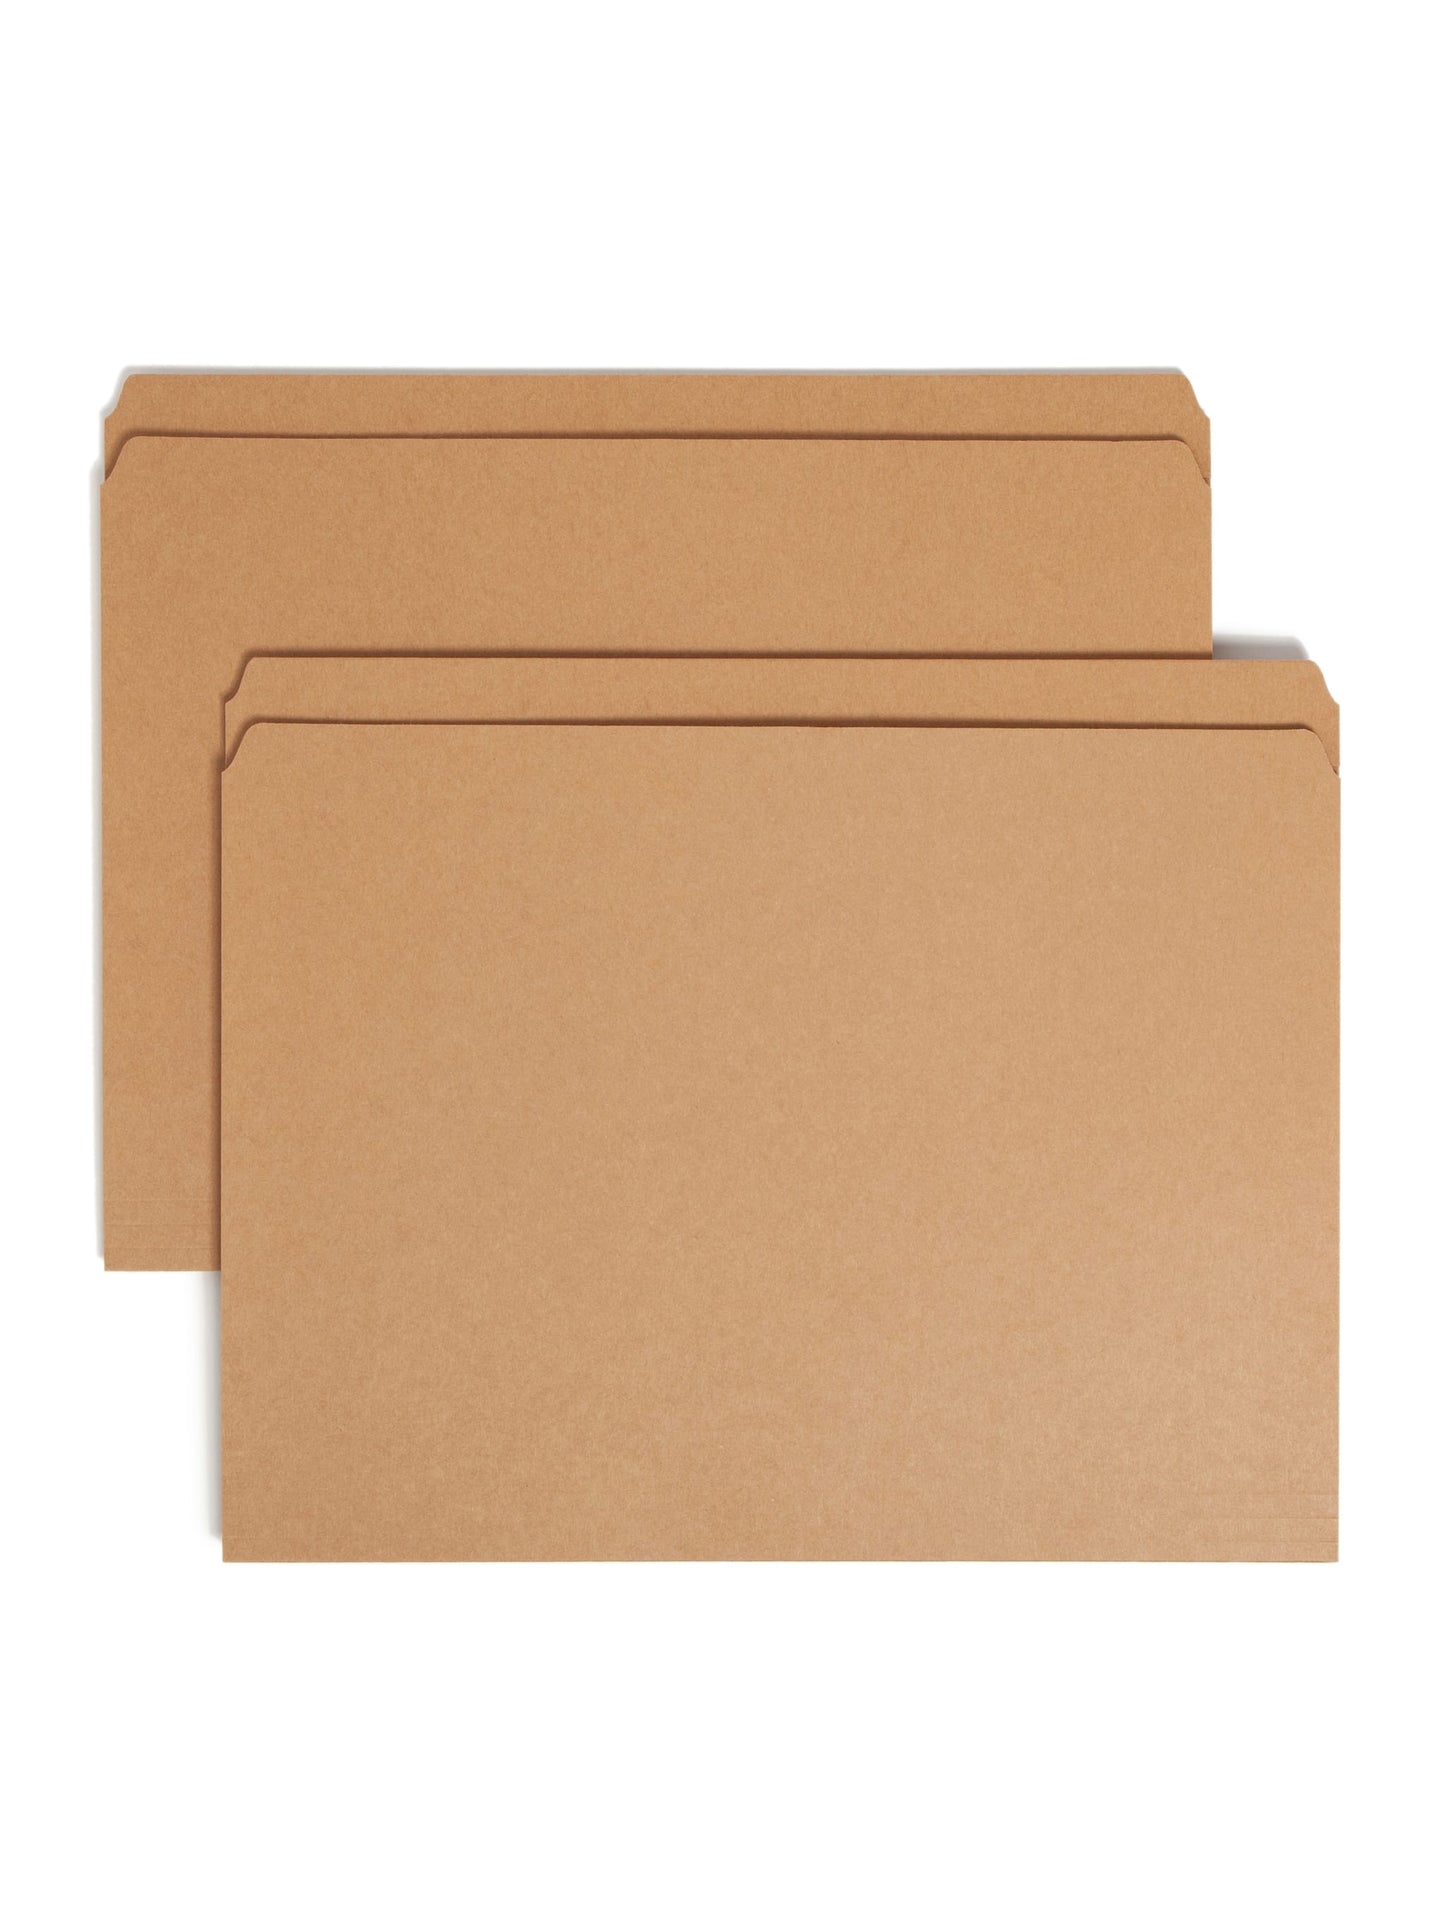 Reinforced Tab File Folders, Straight-Cut Tab, Kraft Color, Letter Size, Set of 100, 086486107105